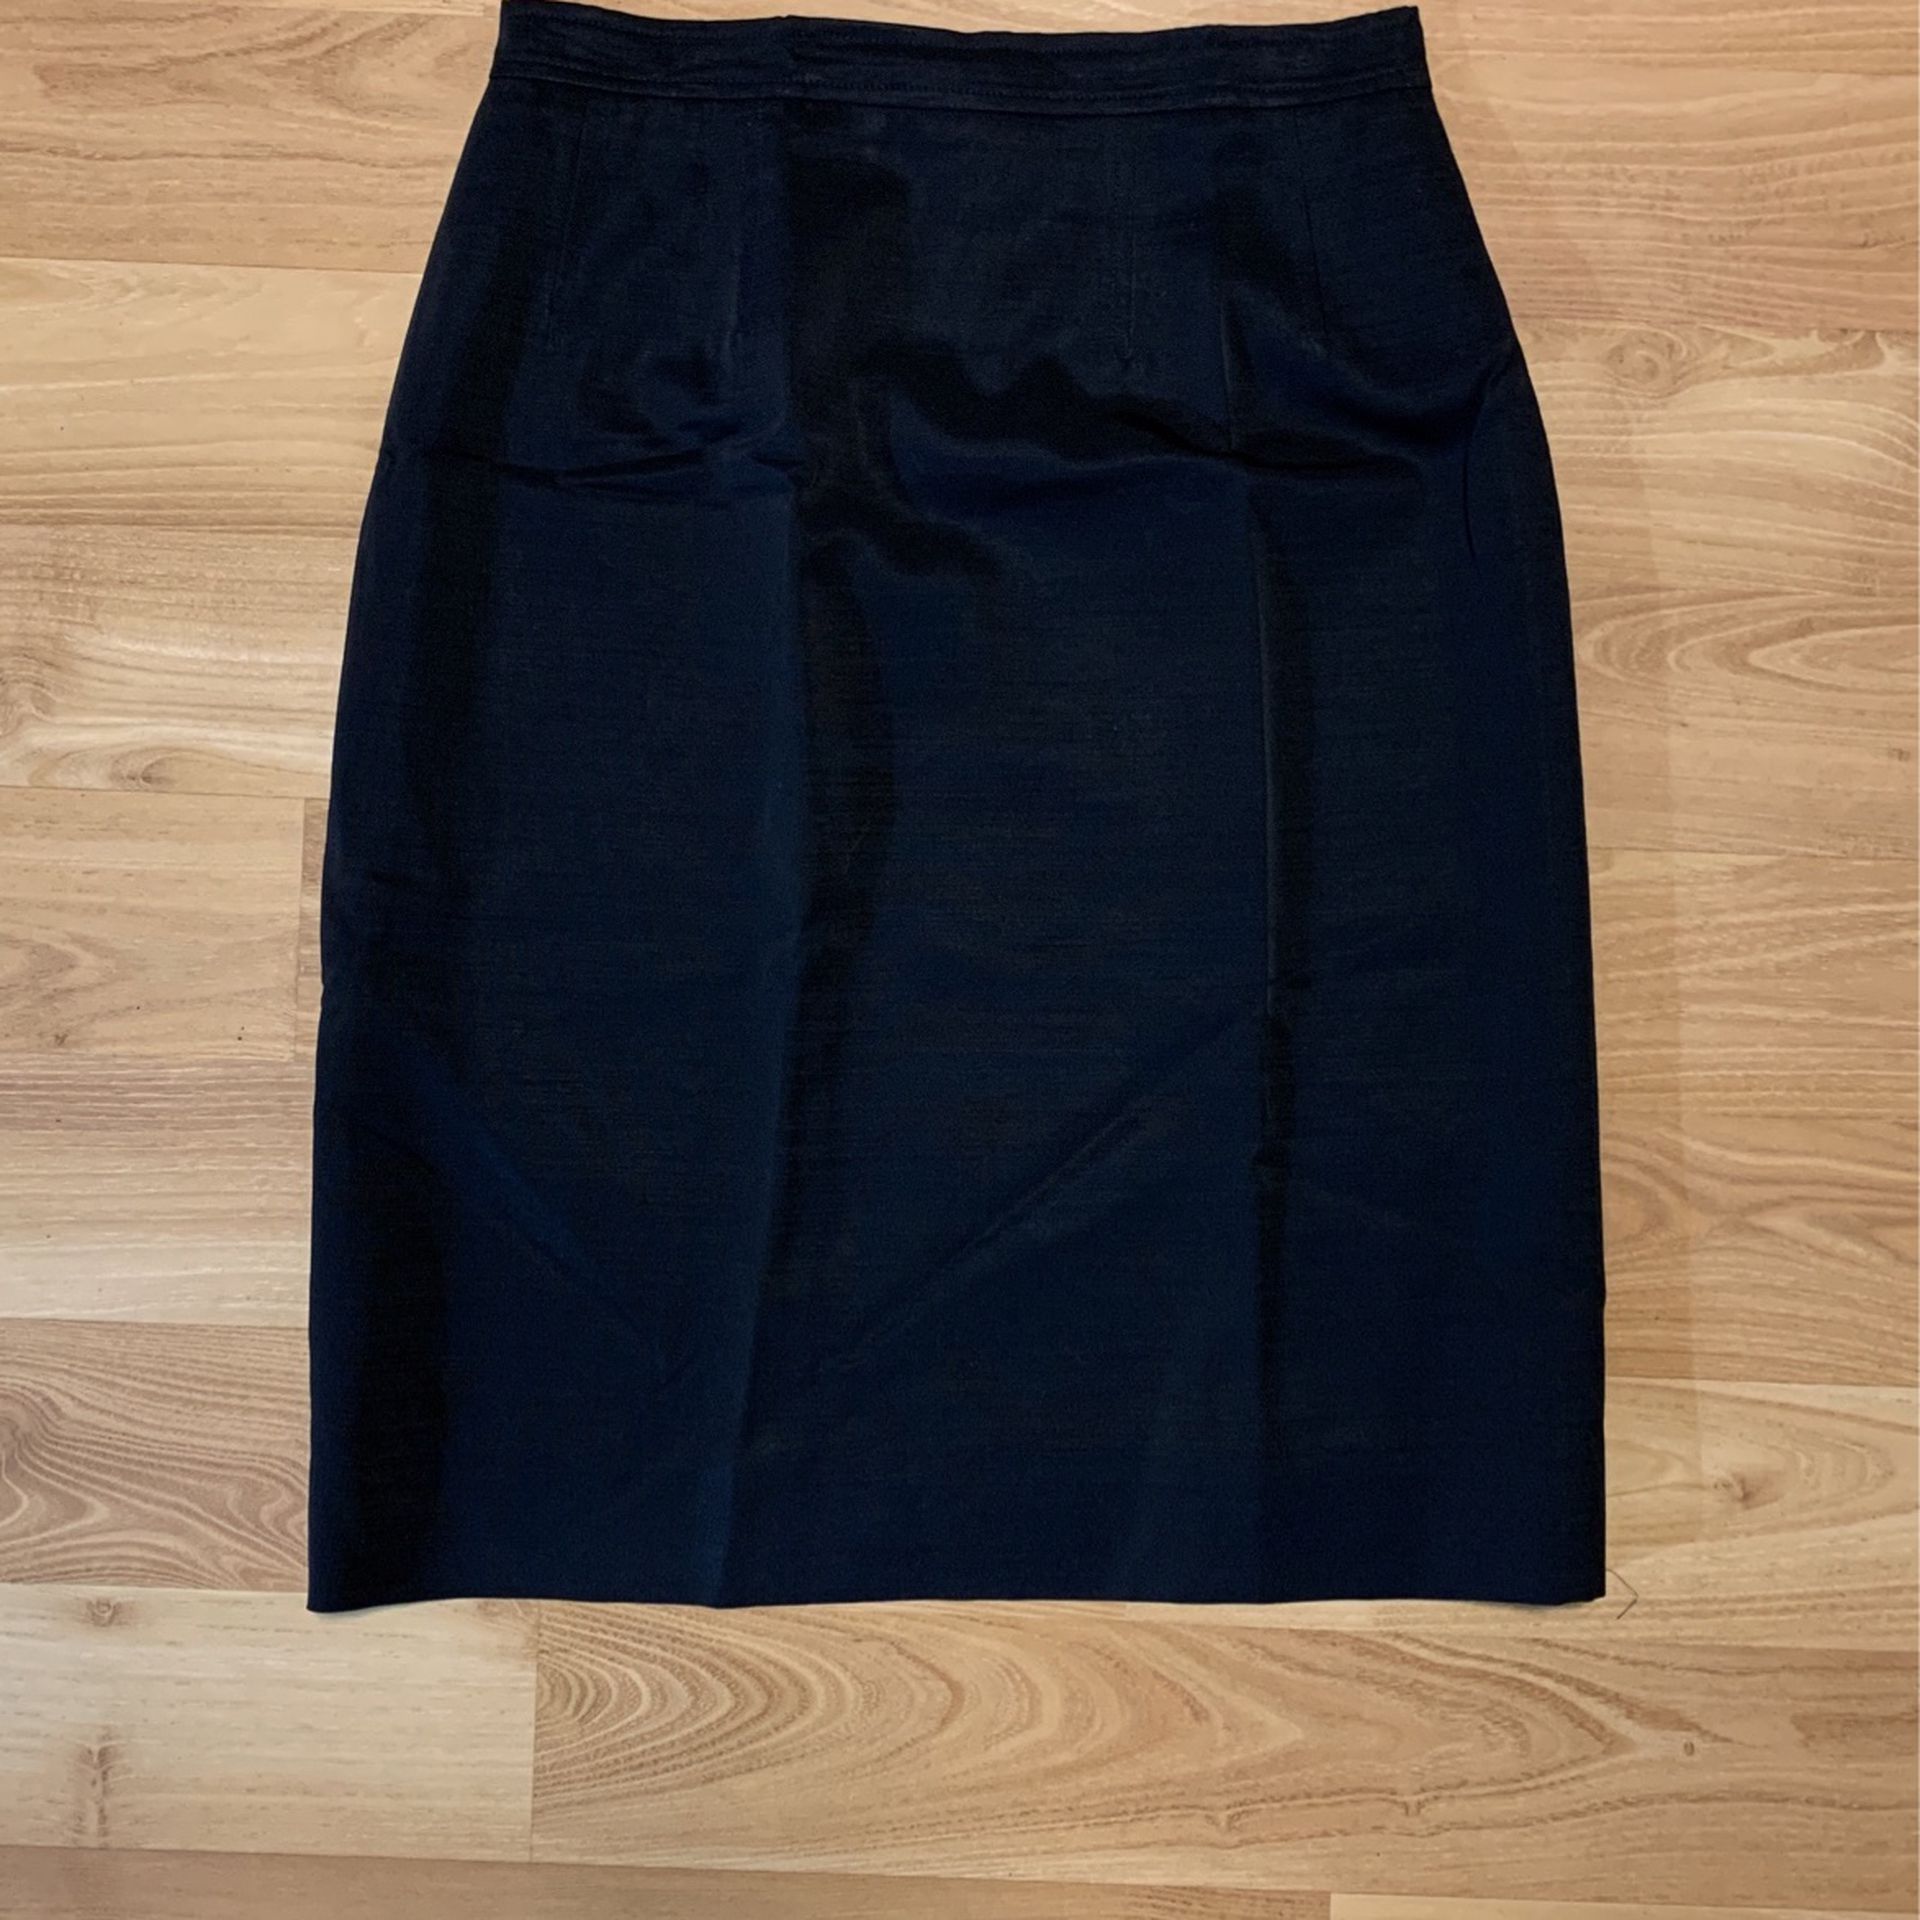 Vintage Chanel Boutique Skirt